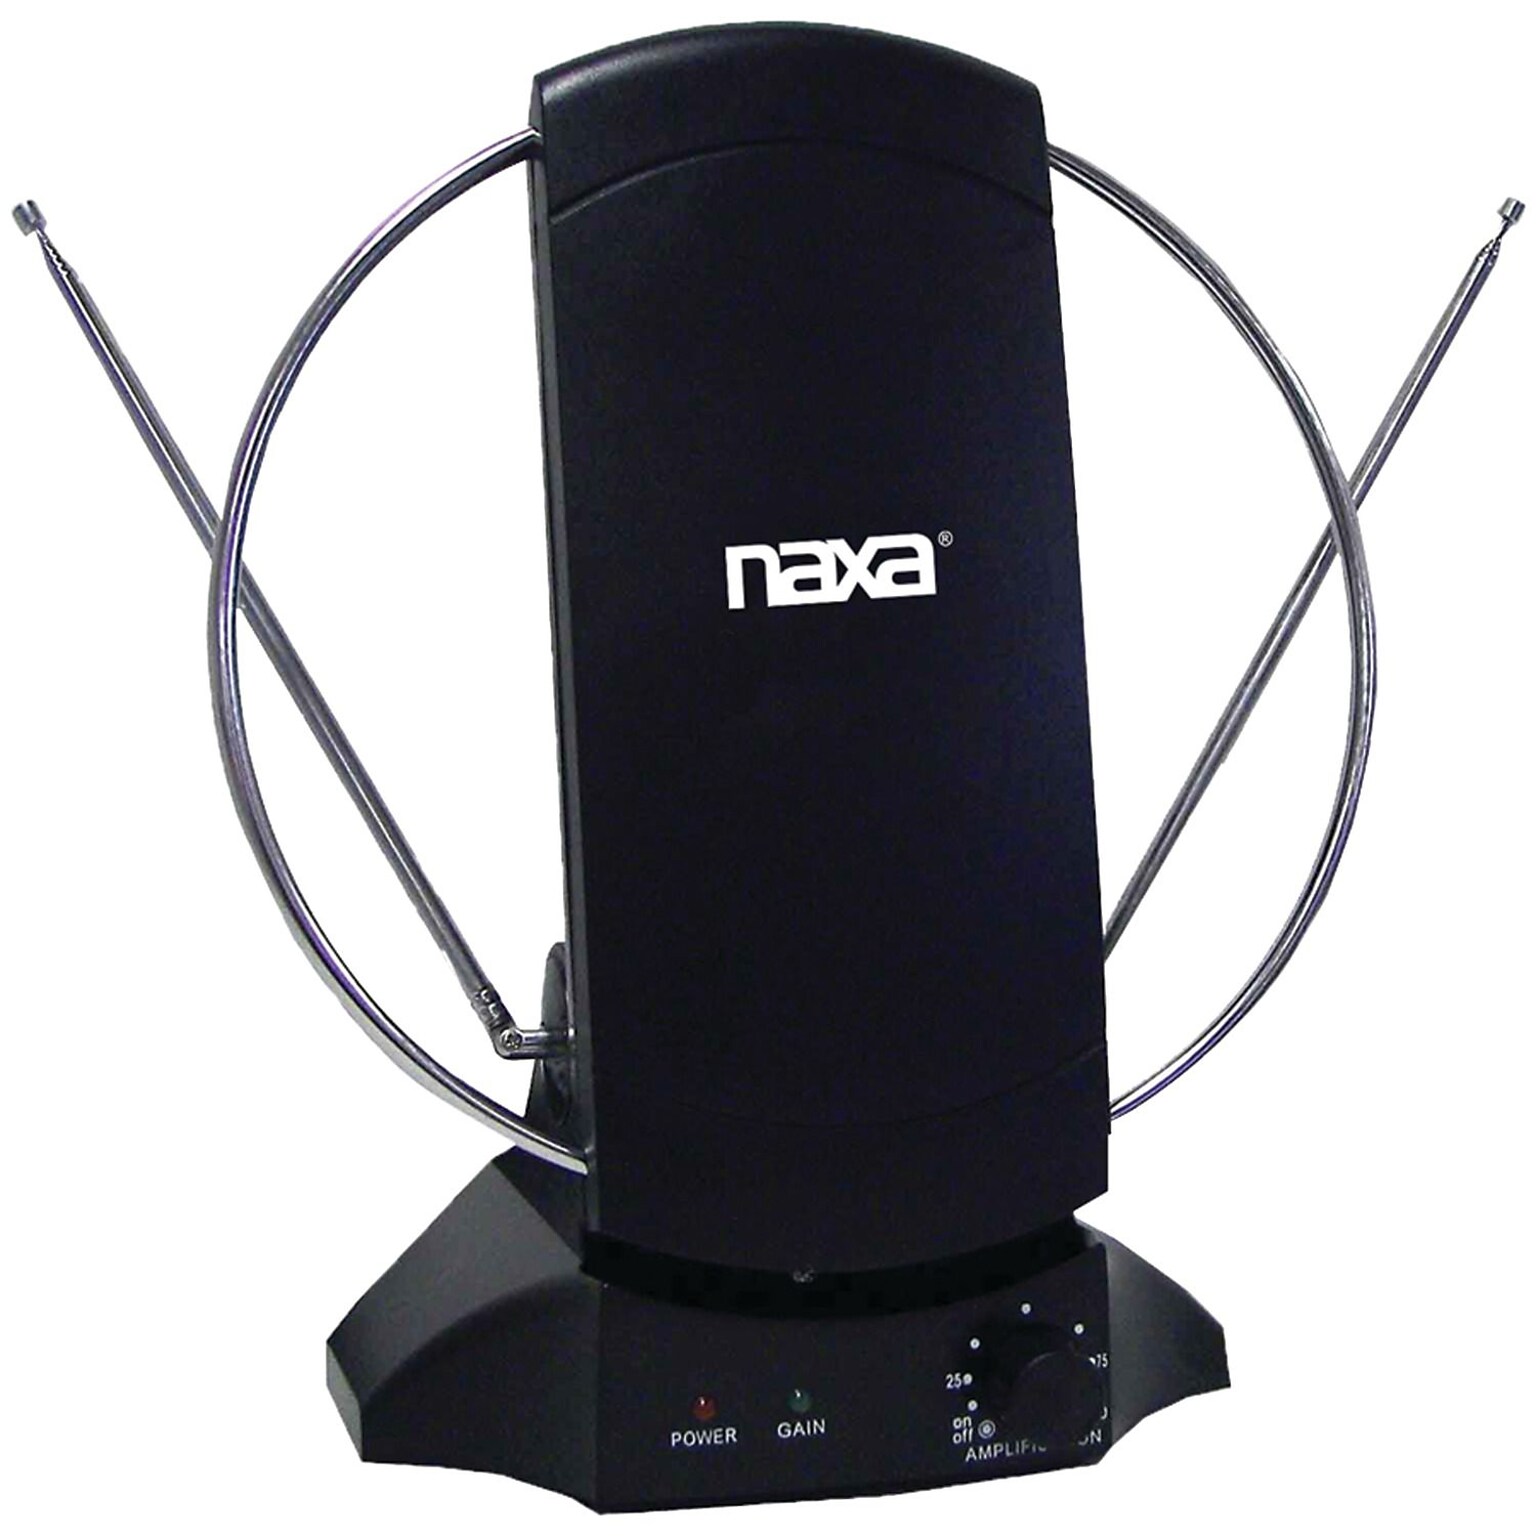 Naxa High-Powered Amplified ATSC/HDTV/FM Antenna, Black (NAXA308)